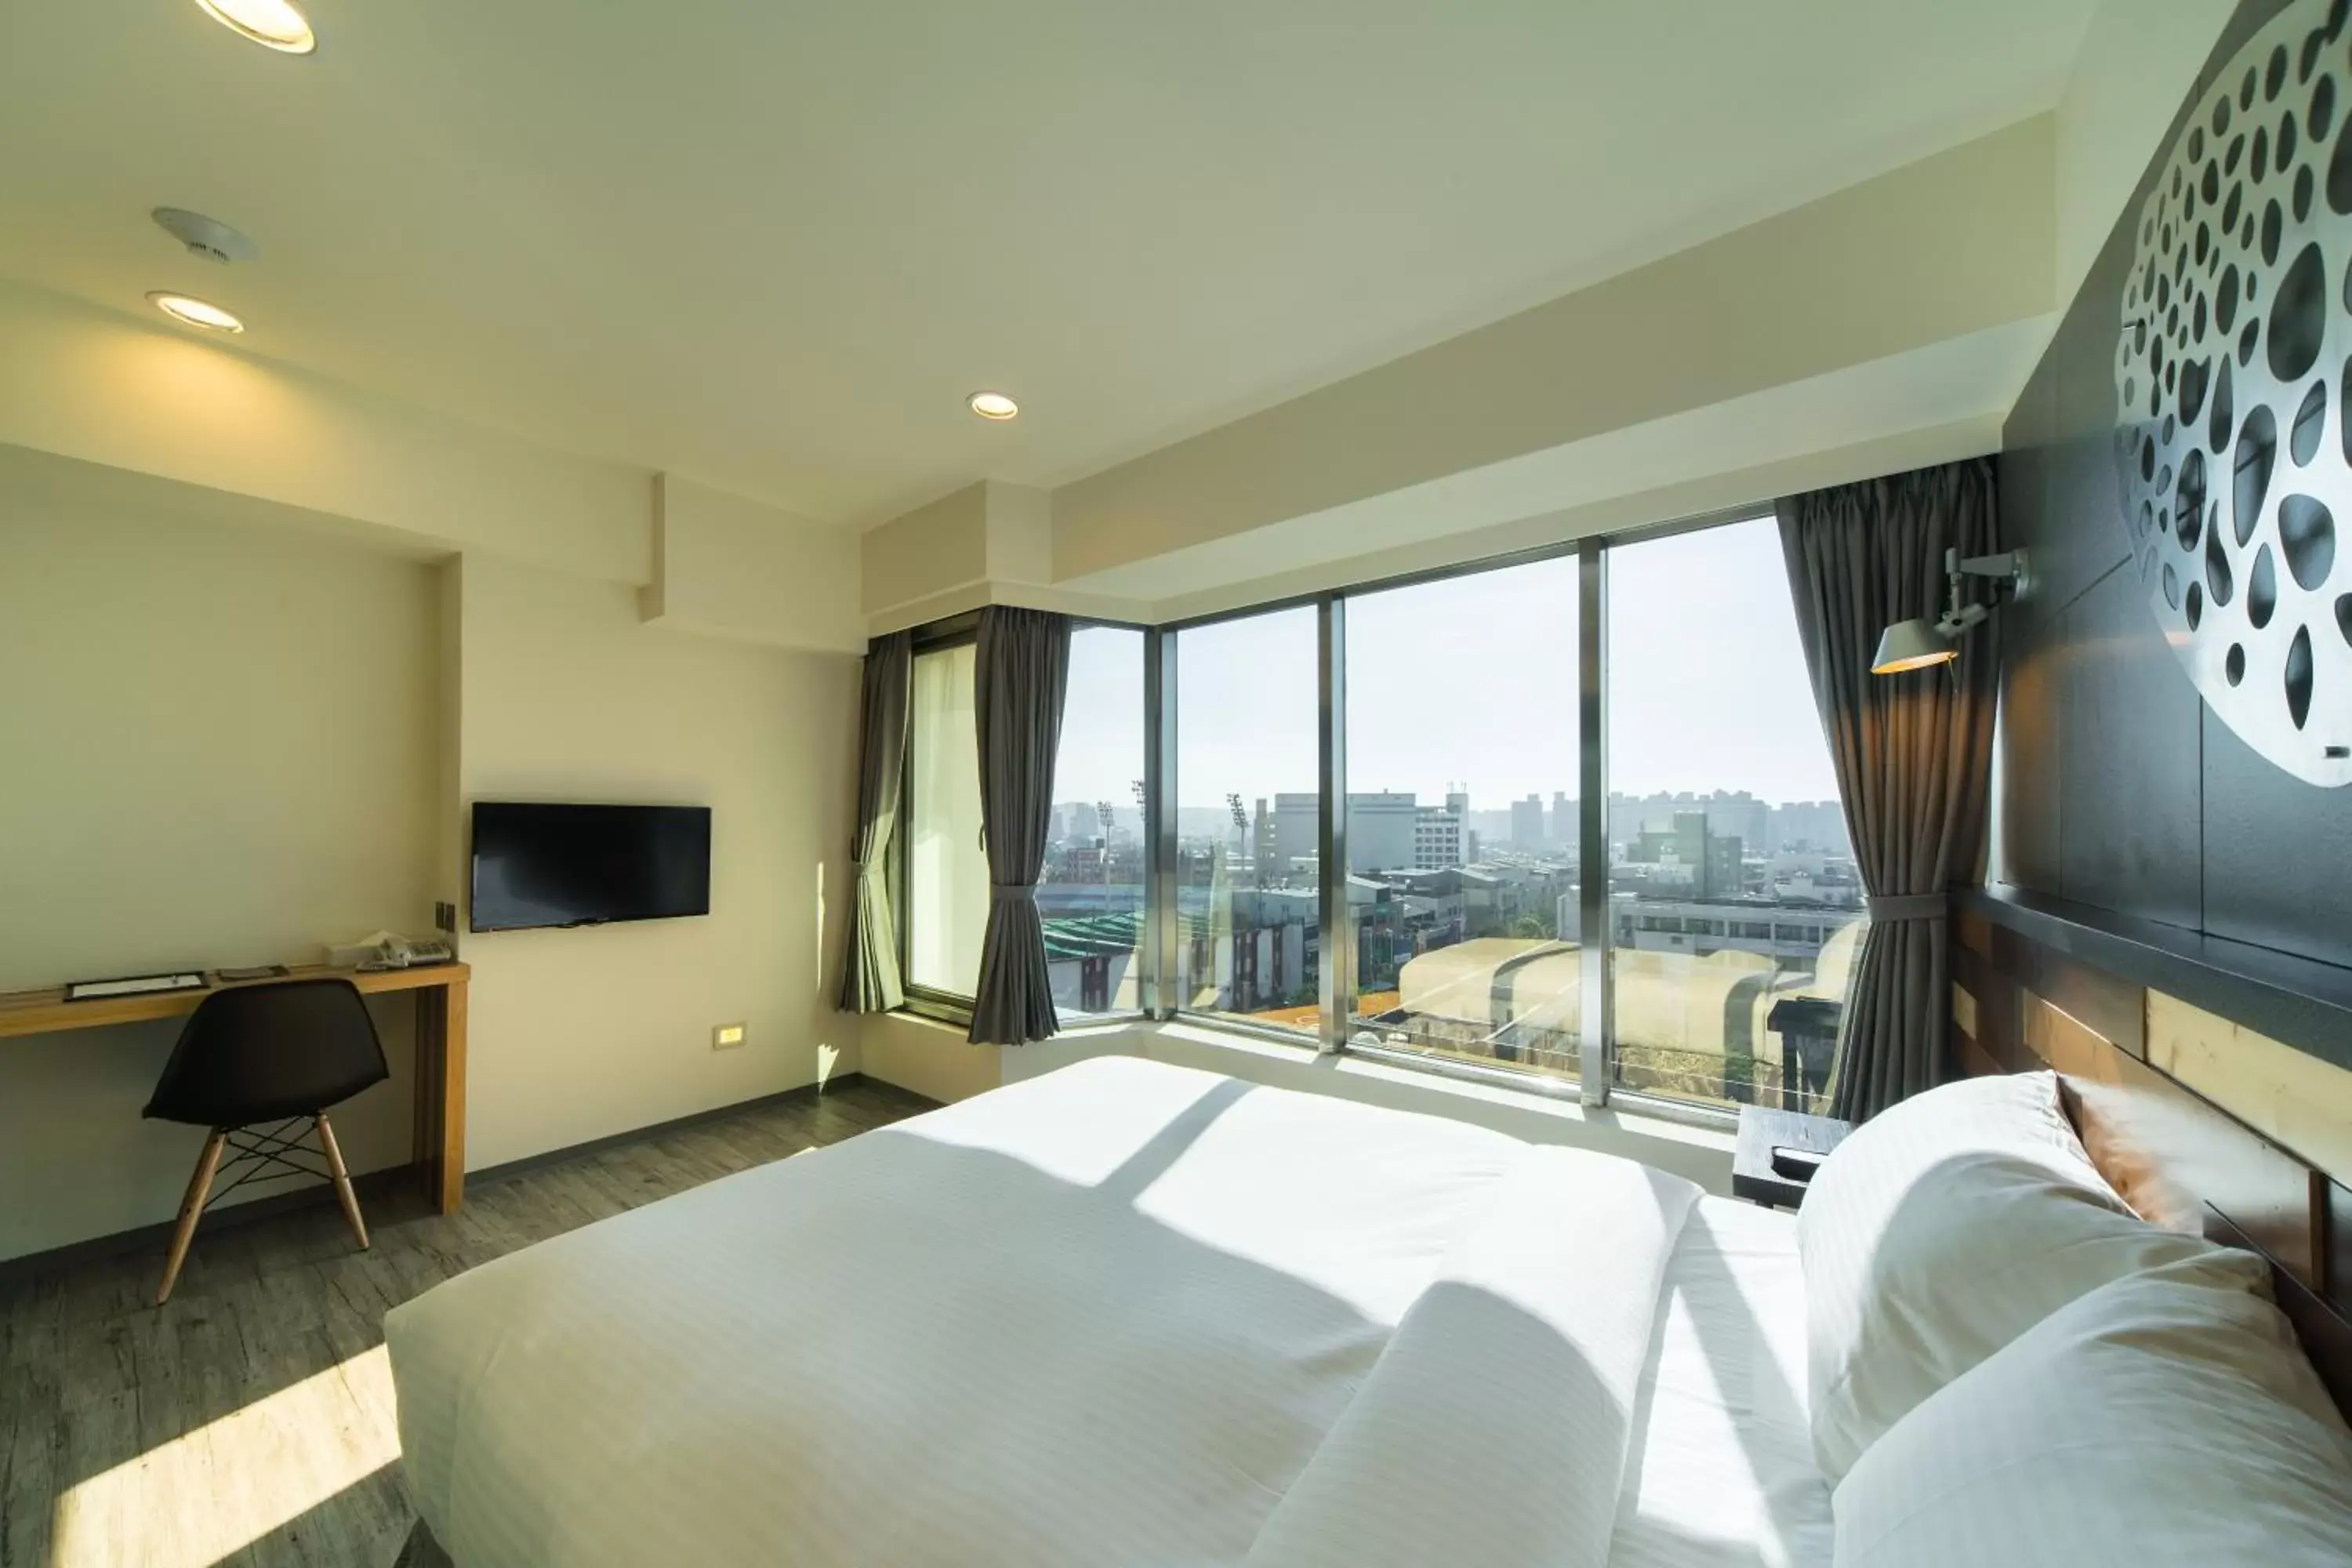 City view, Room Photo in Xinshe Hotel - Hsinchu